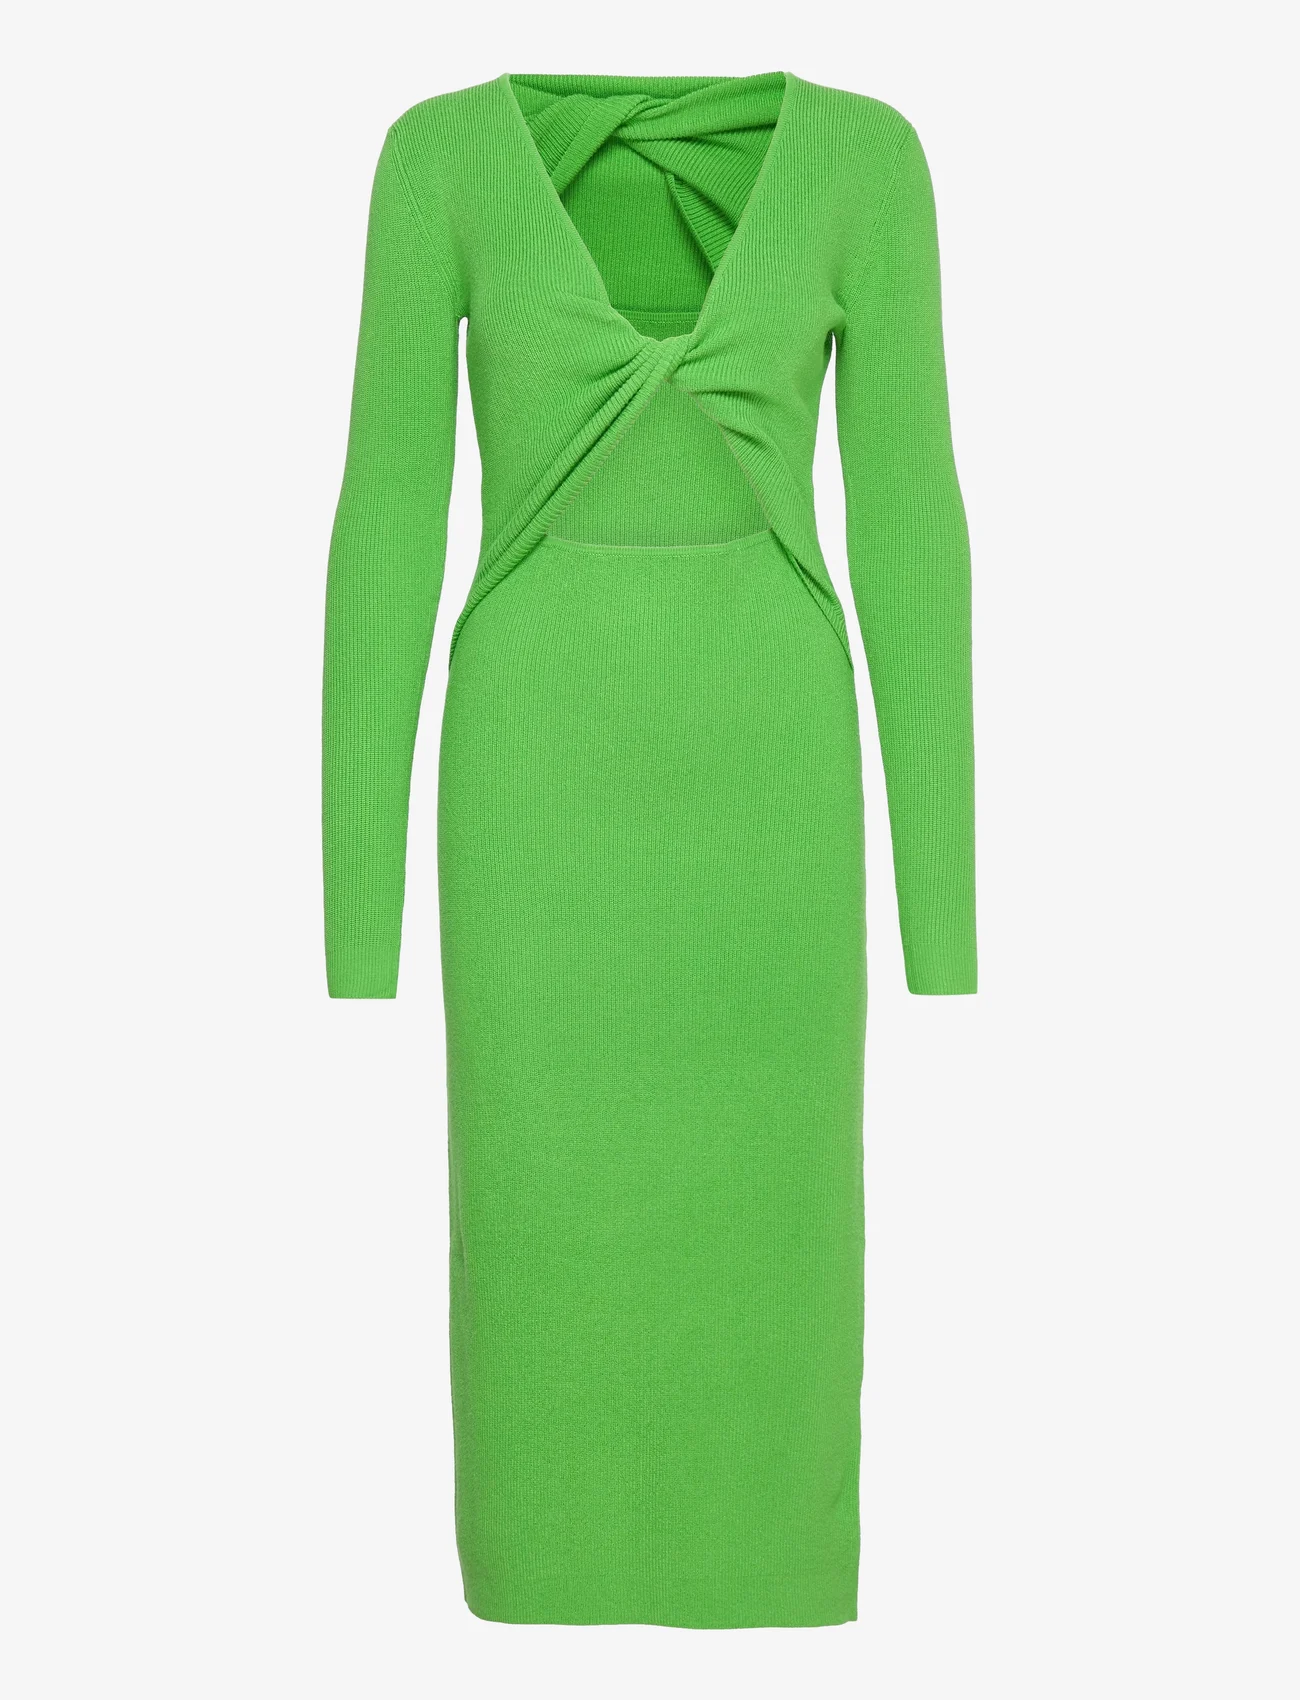 bzr - Lela Jenner dress - bodycon dresses - green flash - 0